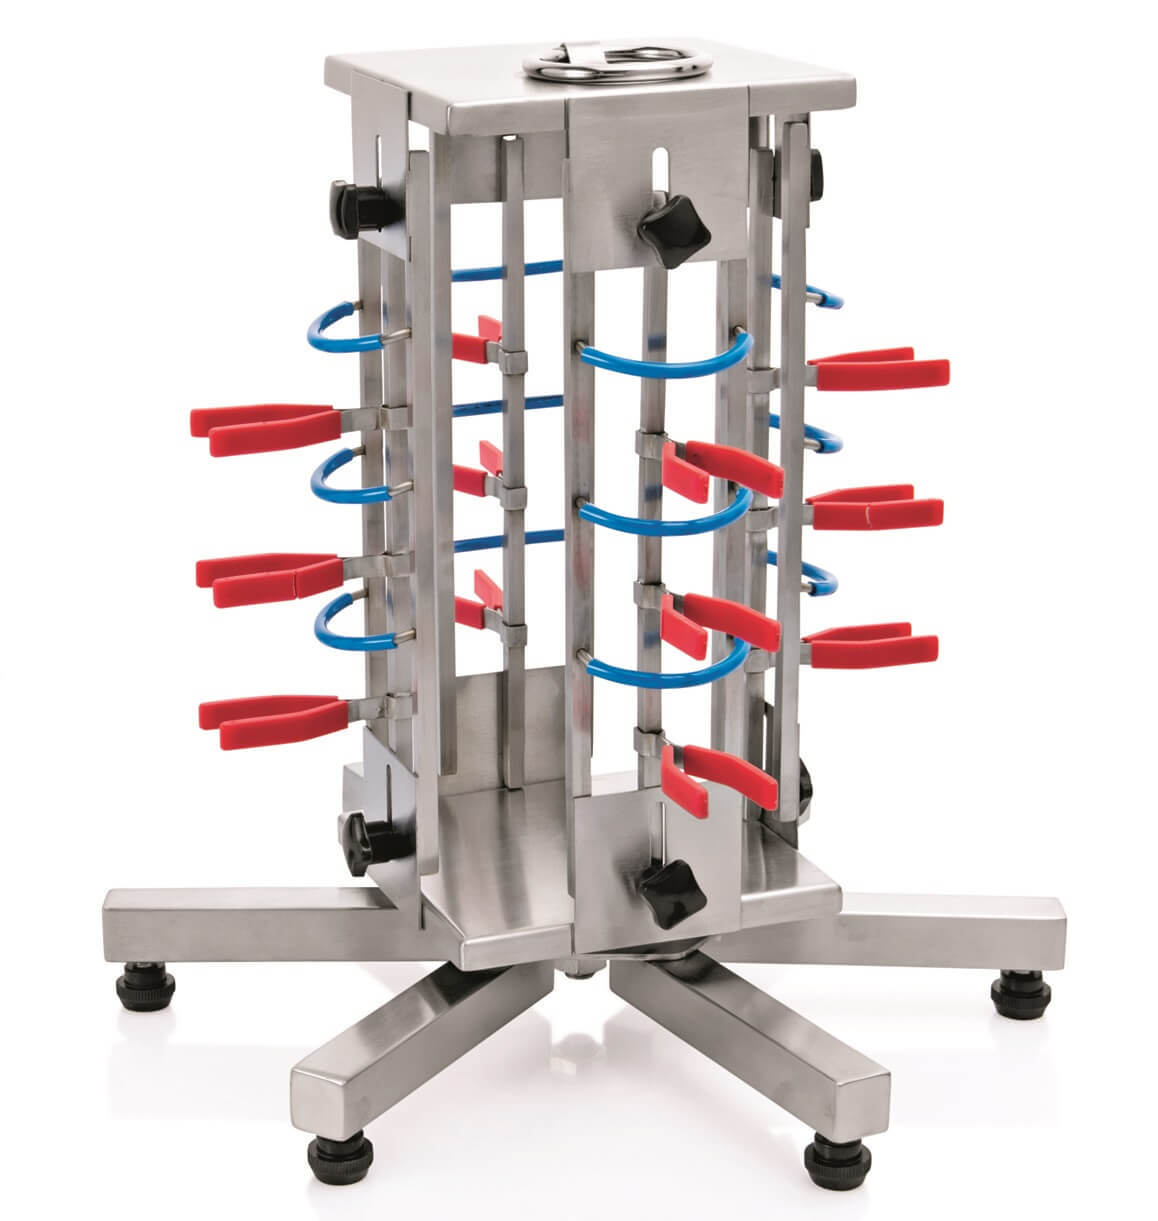 Rotating stainless steel racks for 12 plates